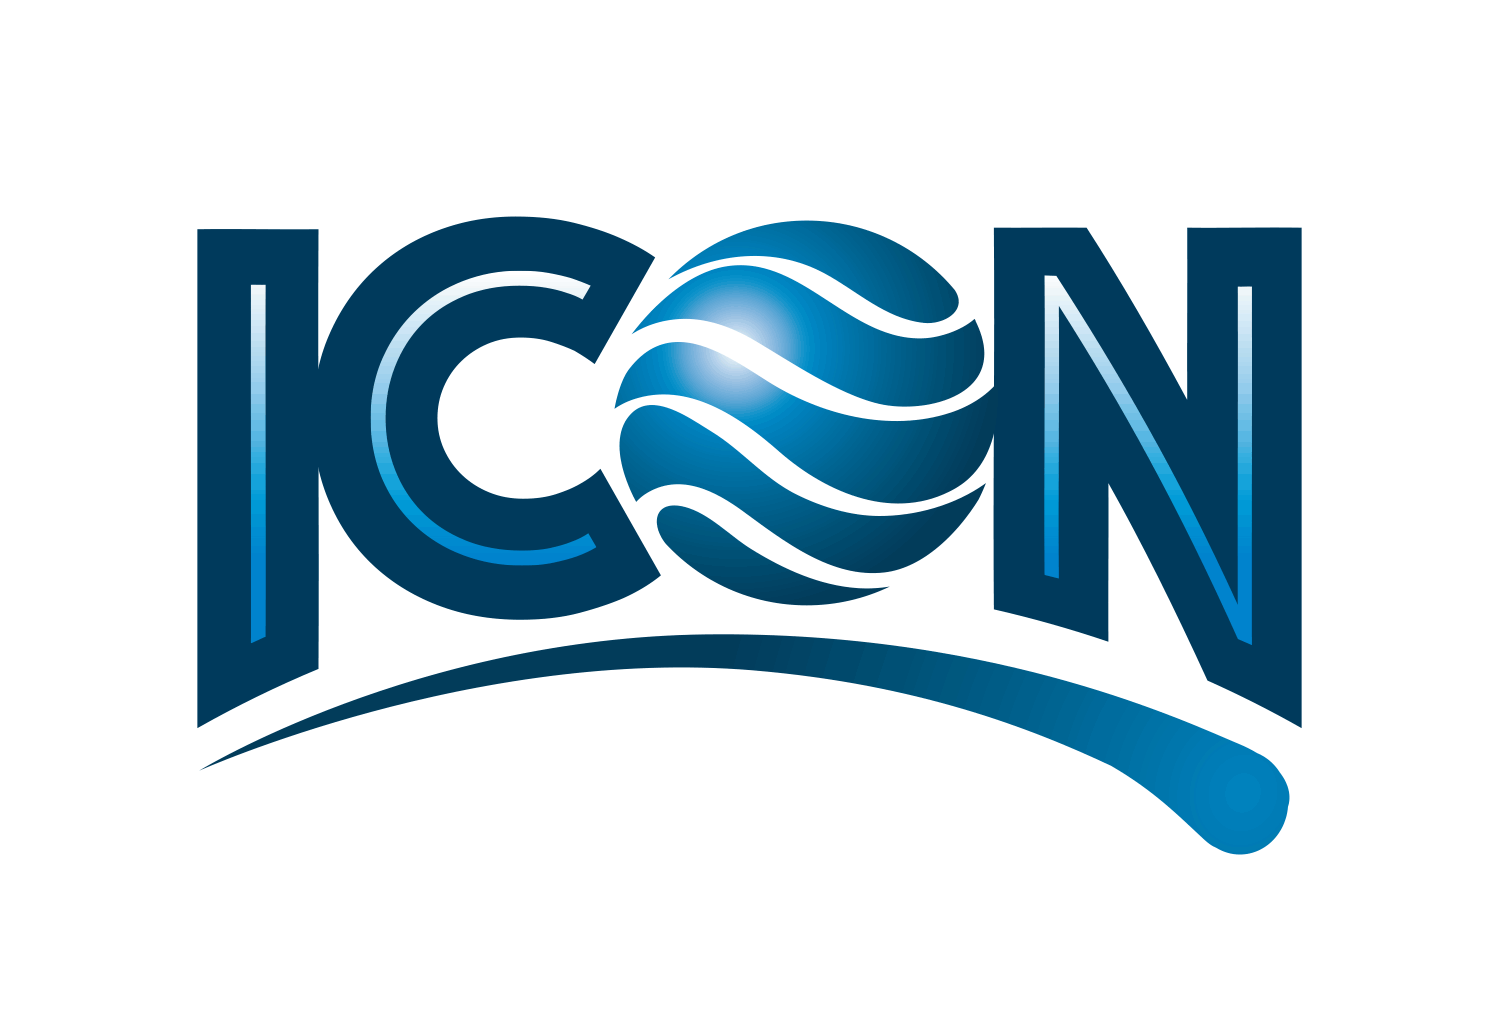 ICON logo design